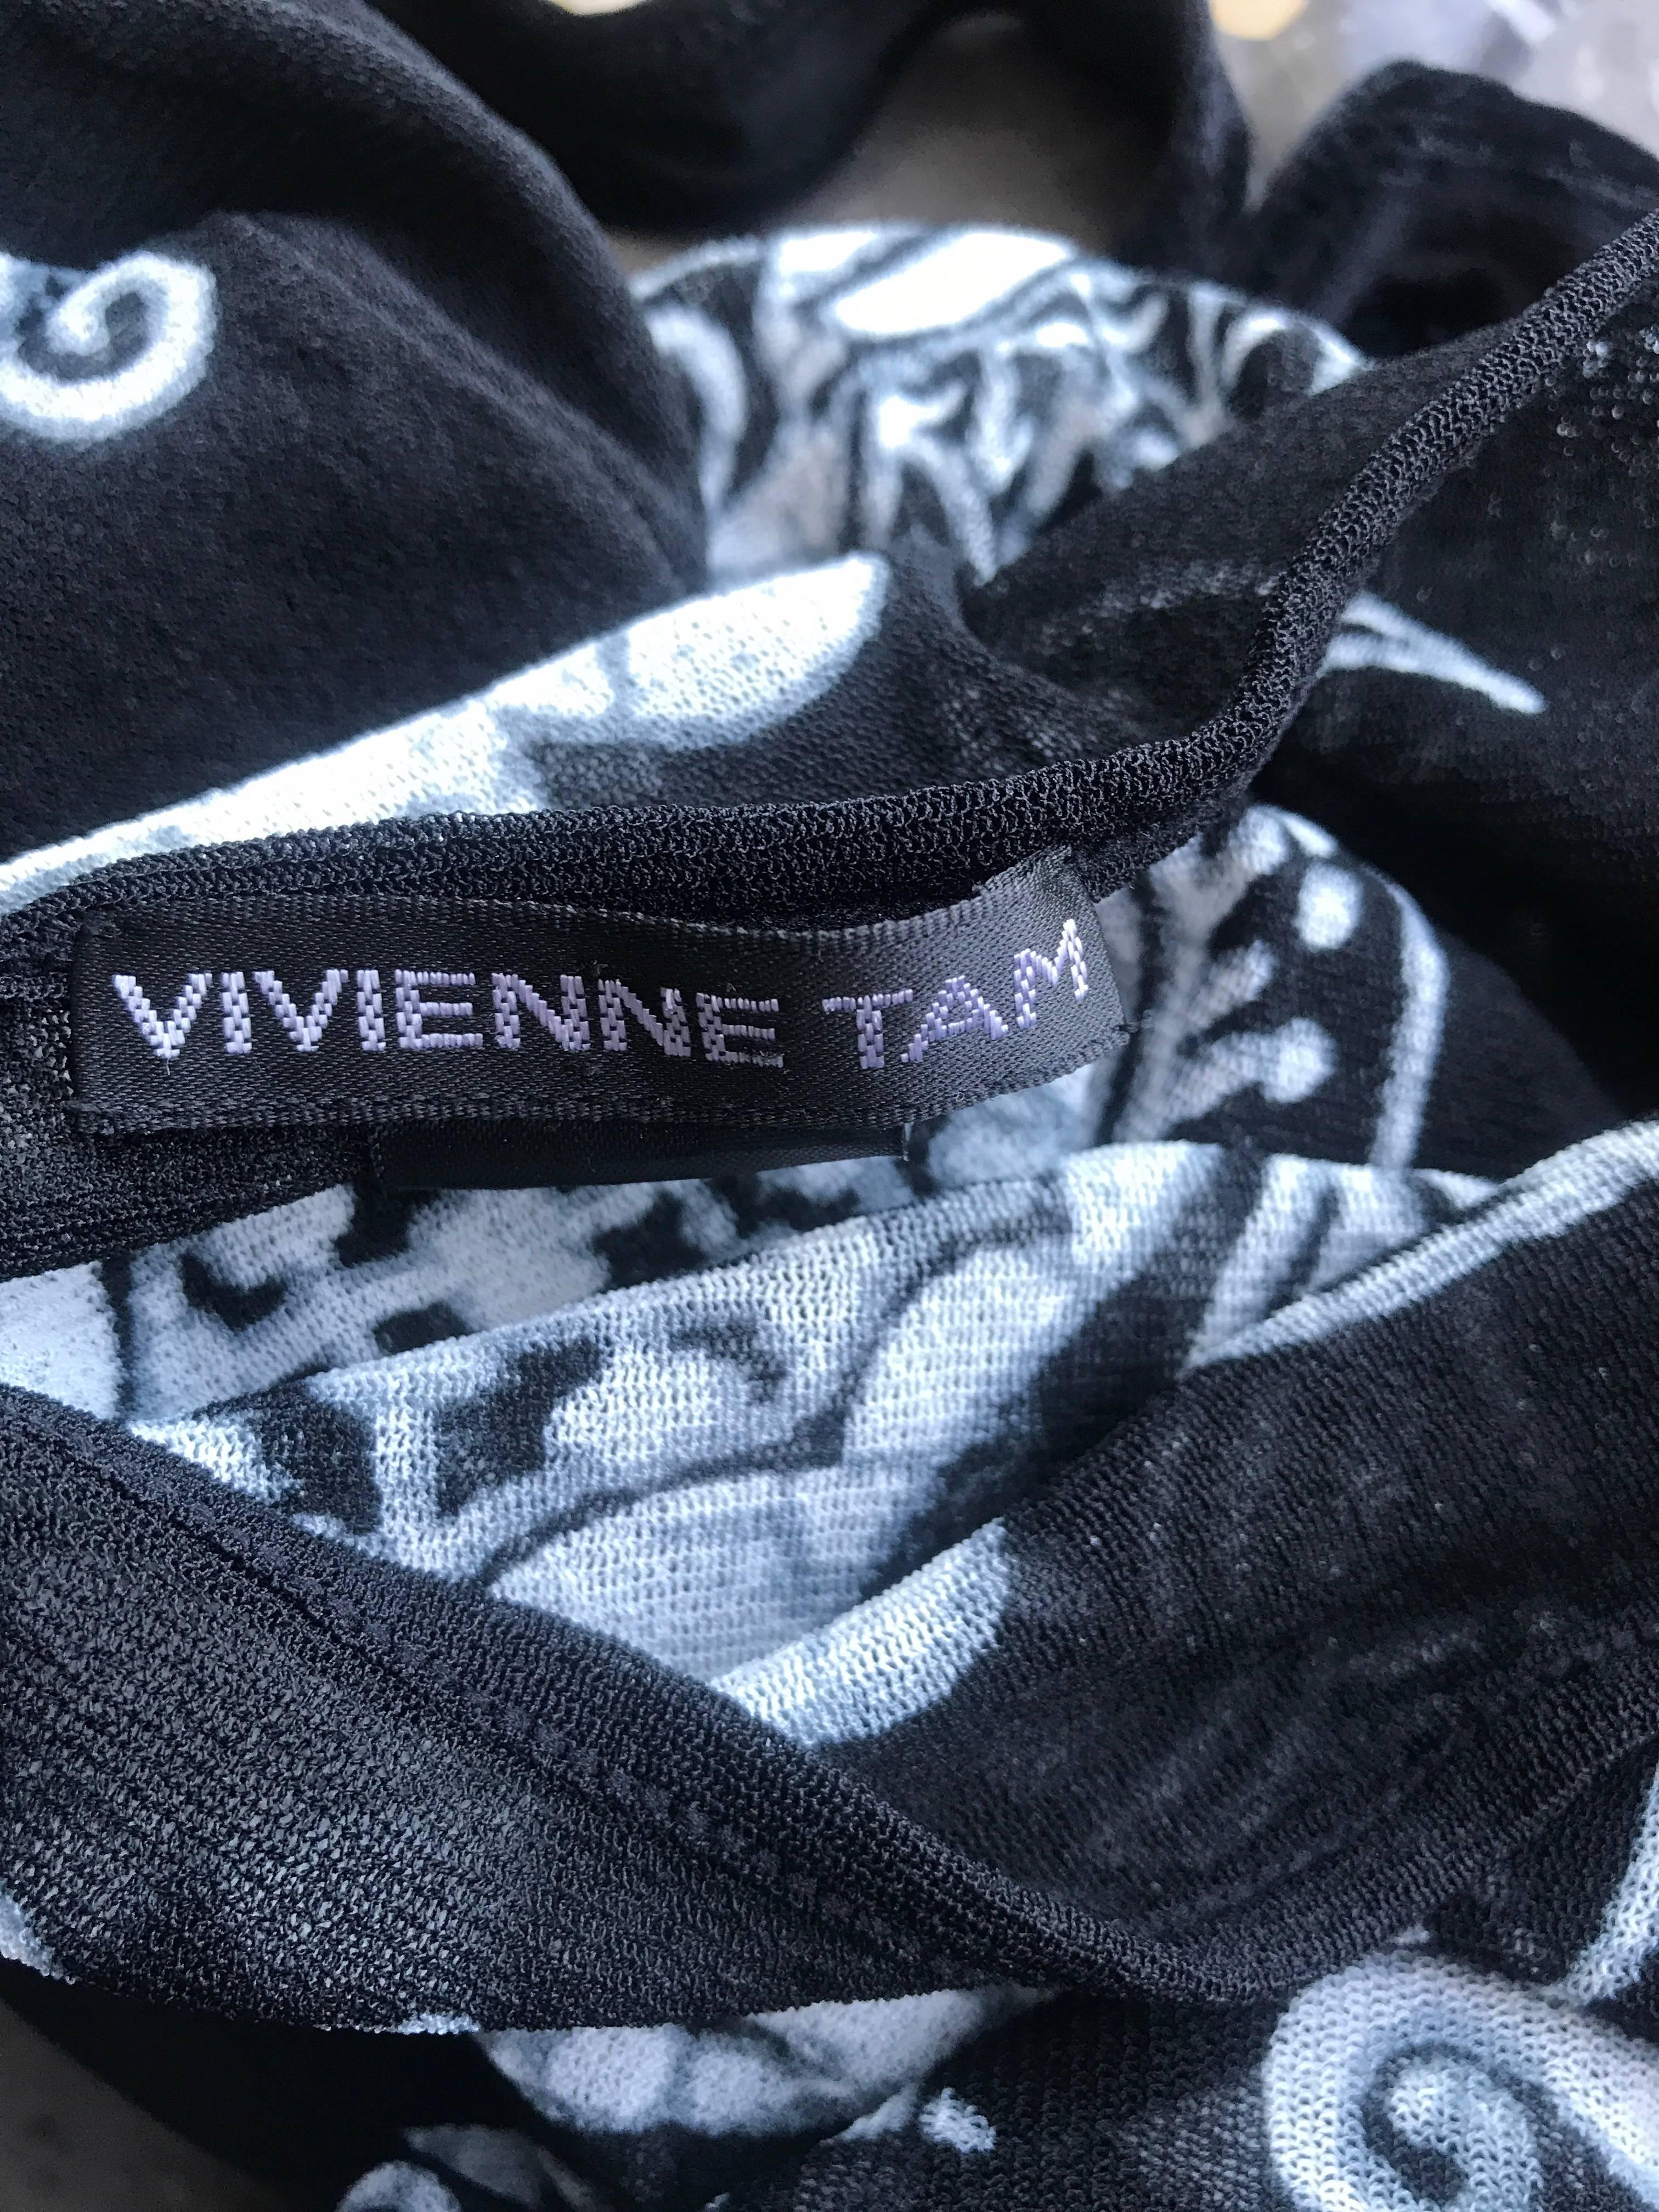 Rare Vivienne Tam 1990s Black and White Sheer Asian Themed 90s Vintage Dress 2